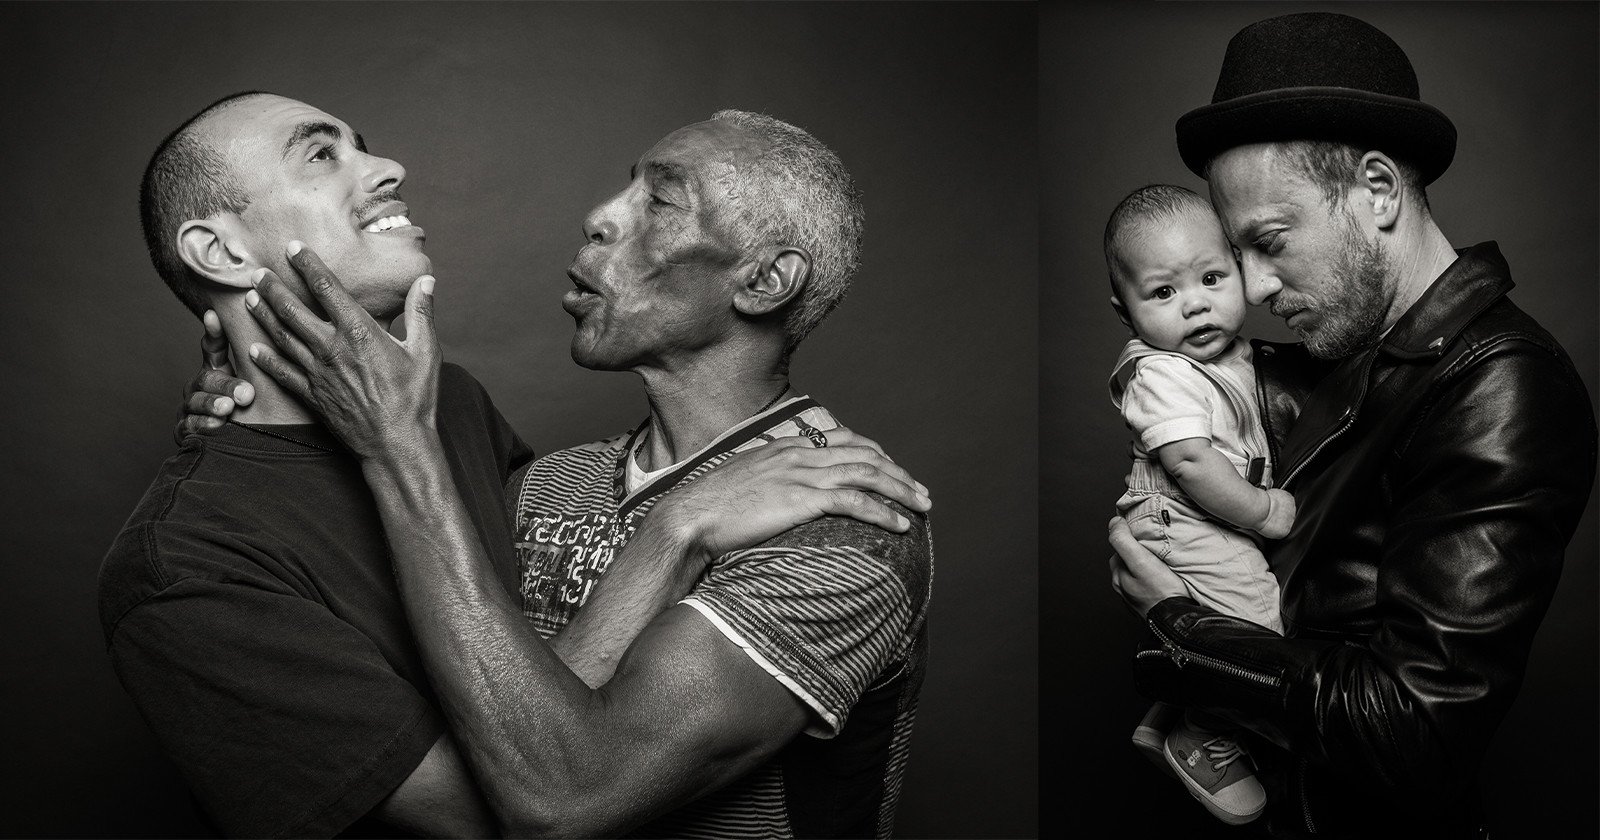  emotional portrait project explores meaning fatherhood 